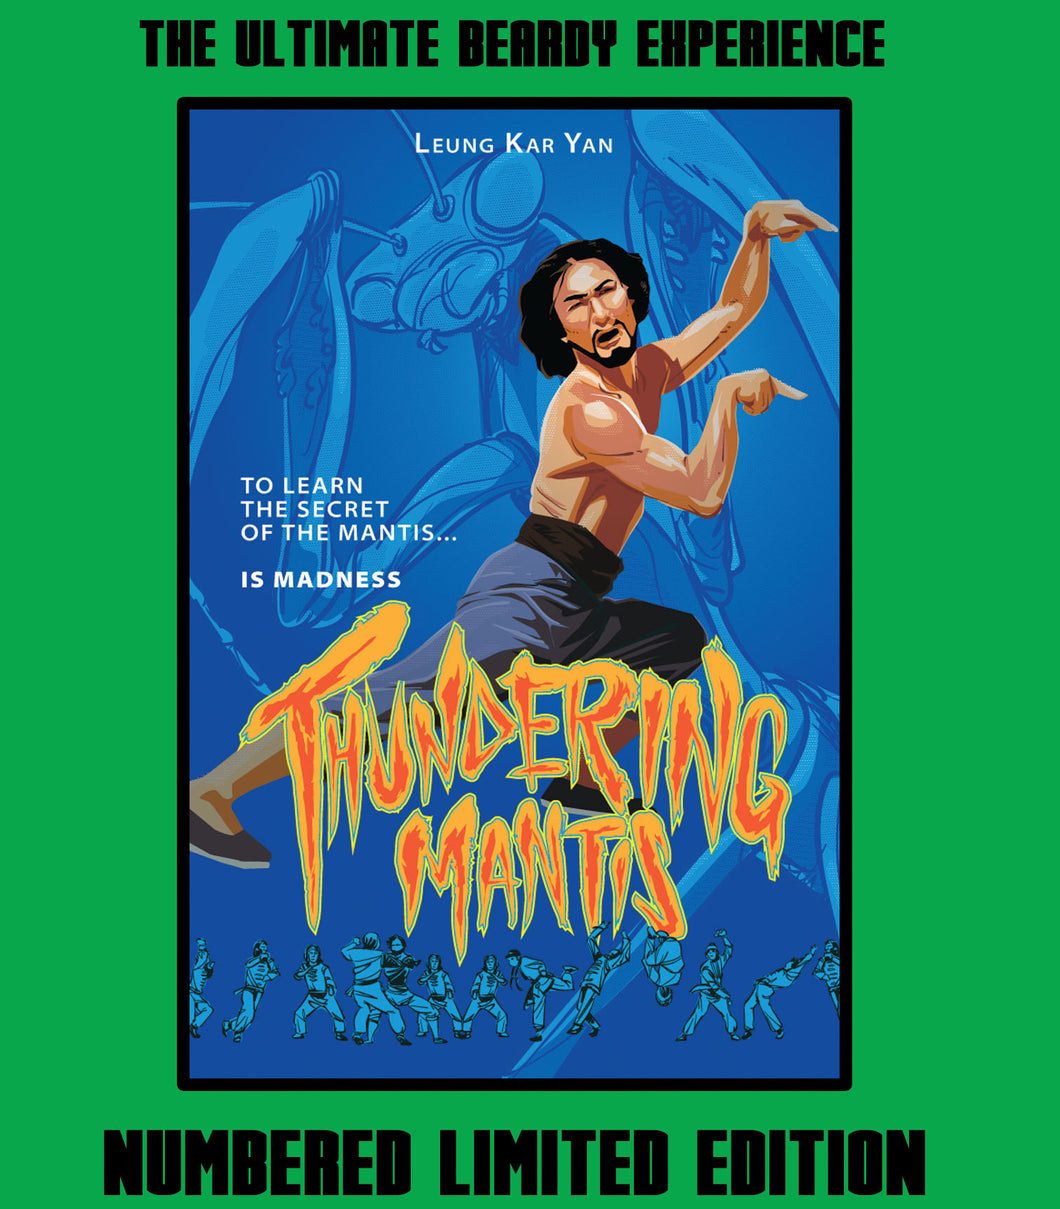 Blu-ray: Thundering Mantis